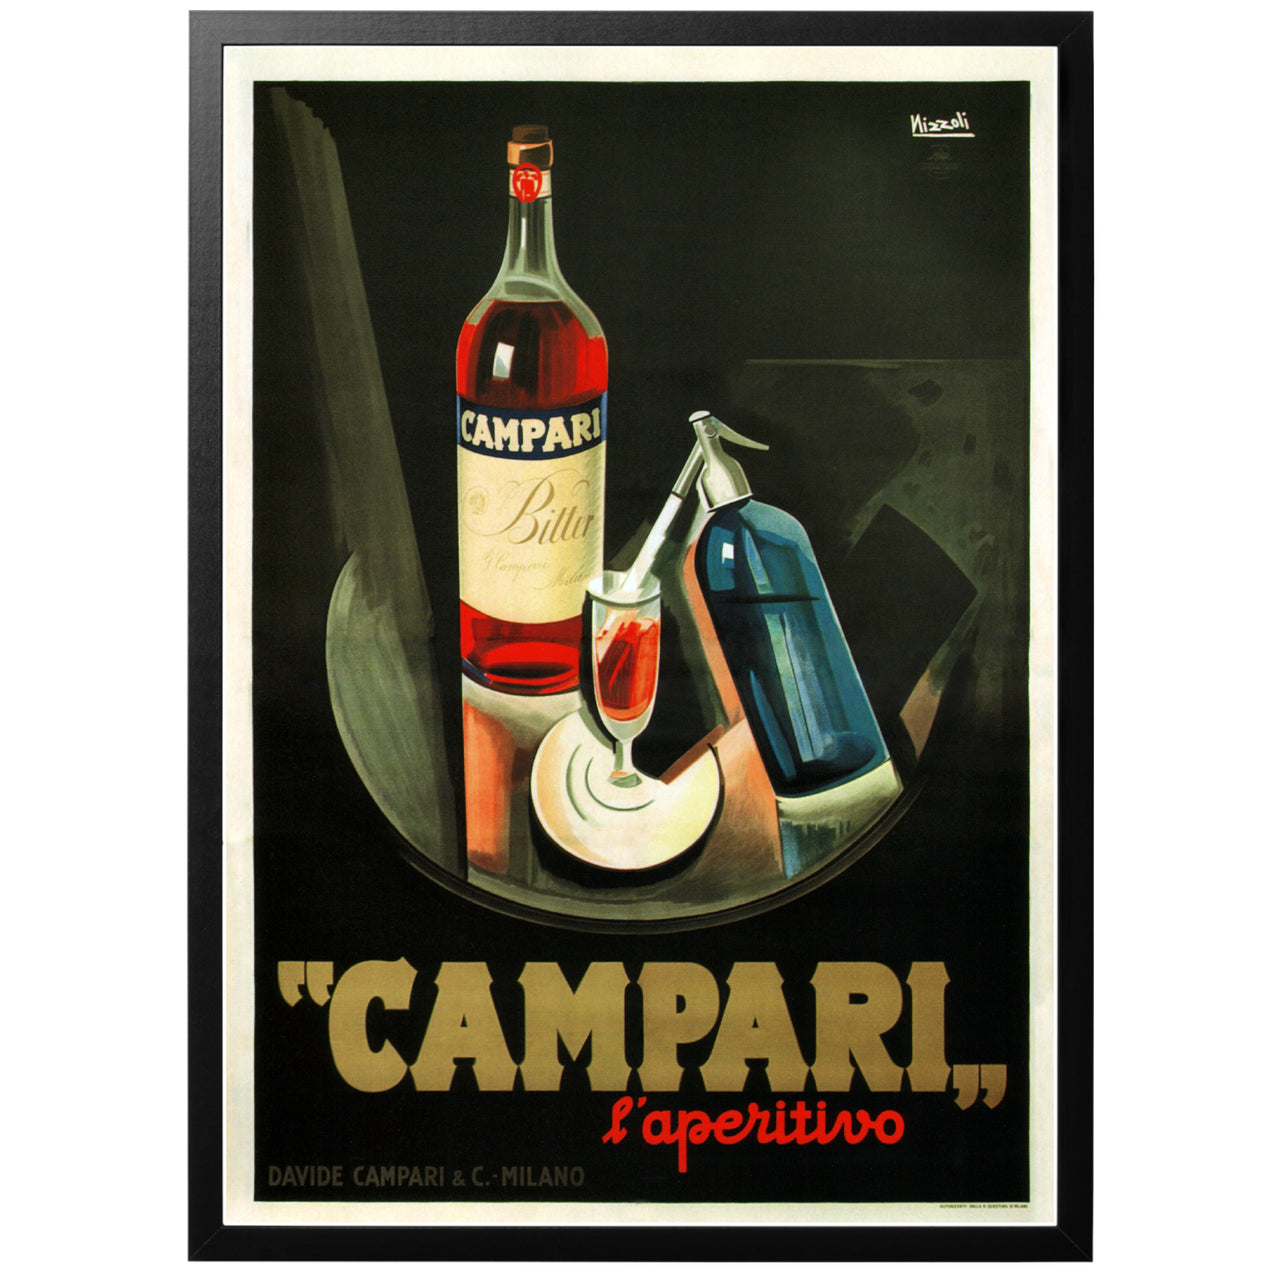 Campari - Aperitif vintage italiensk aperitif reklam med ram